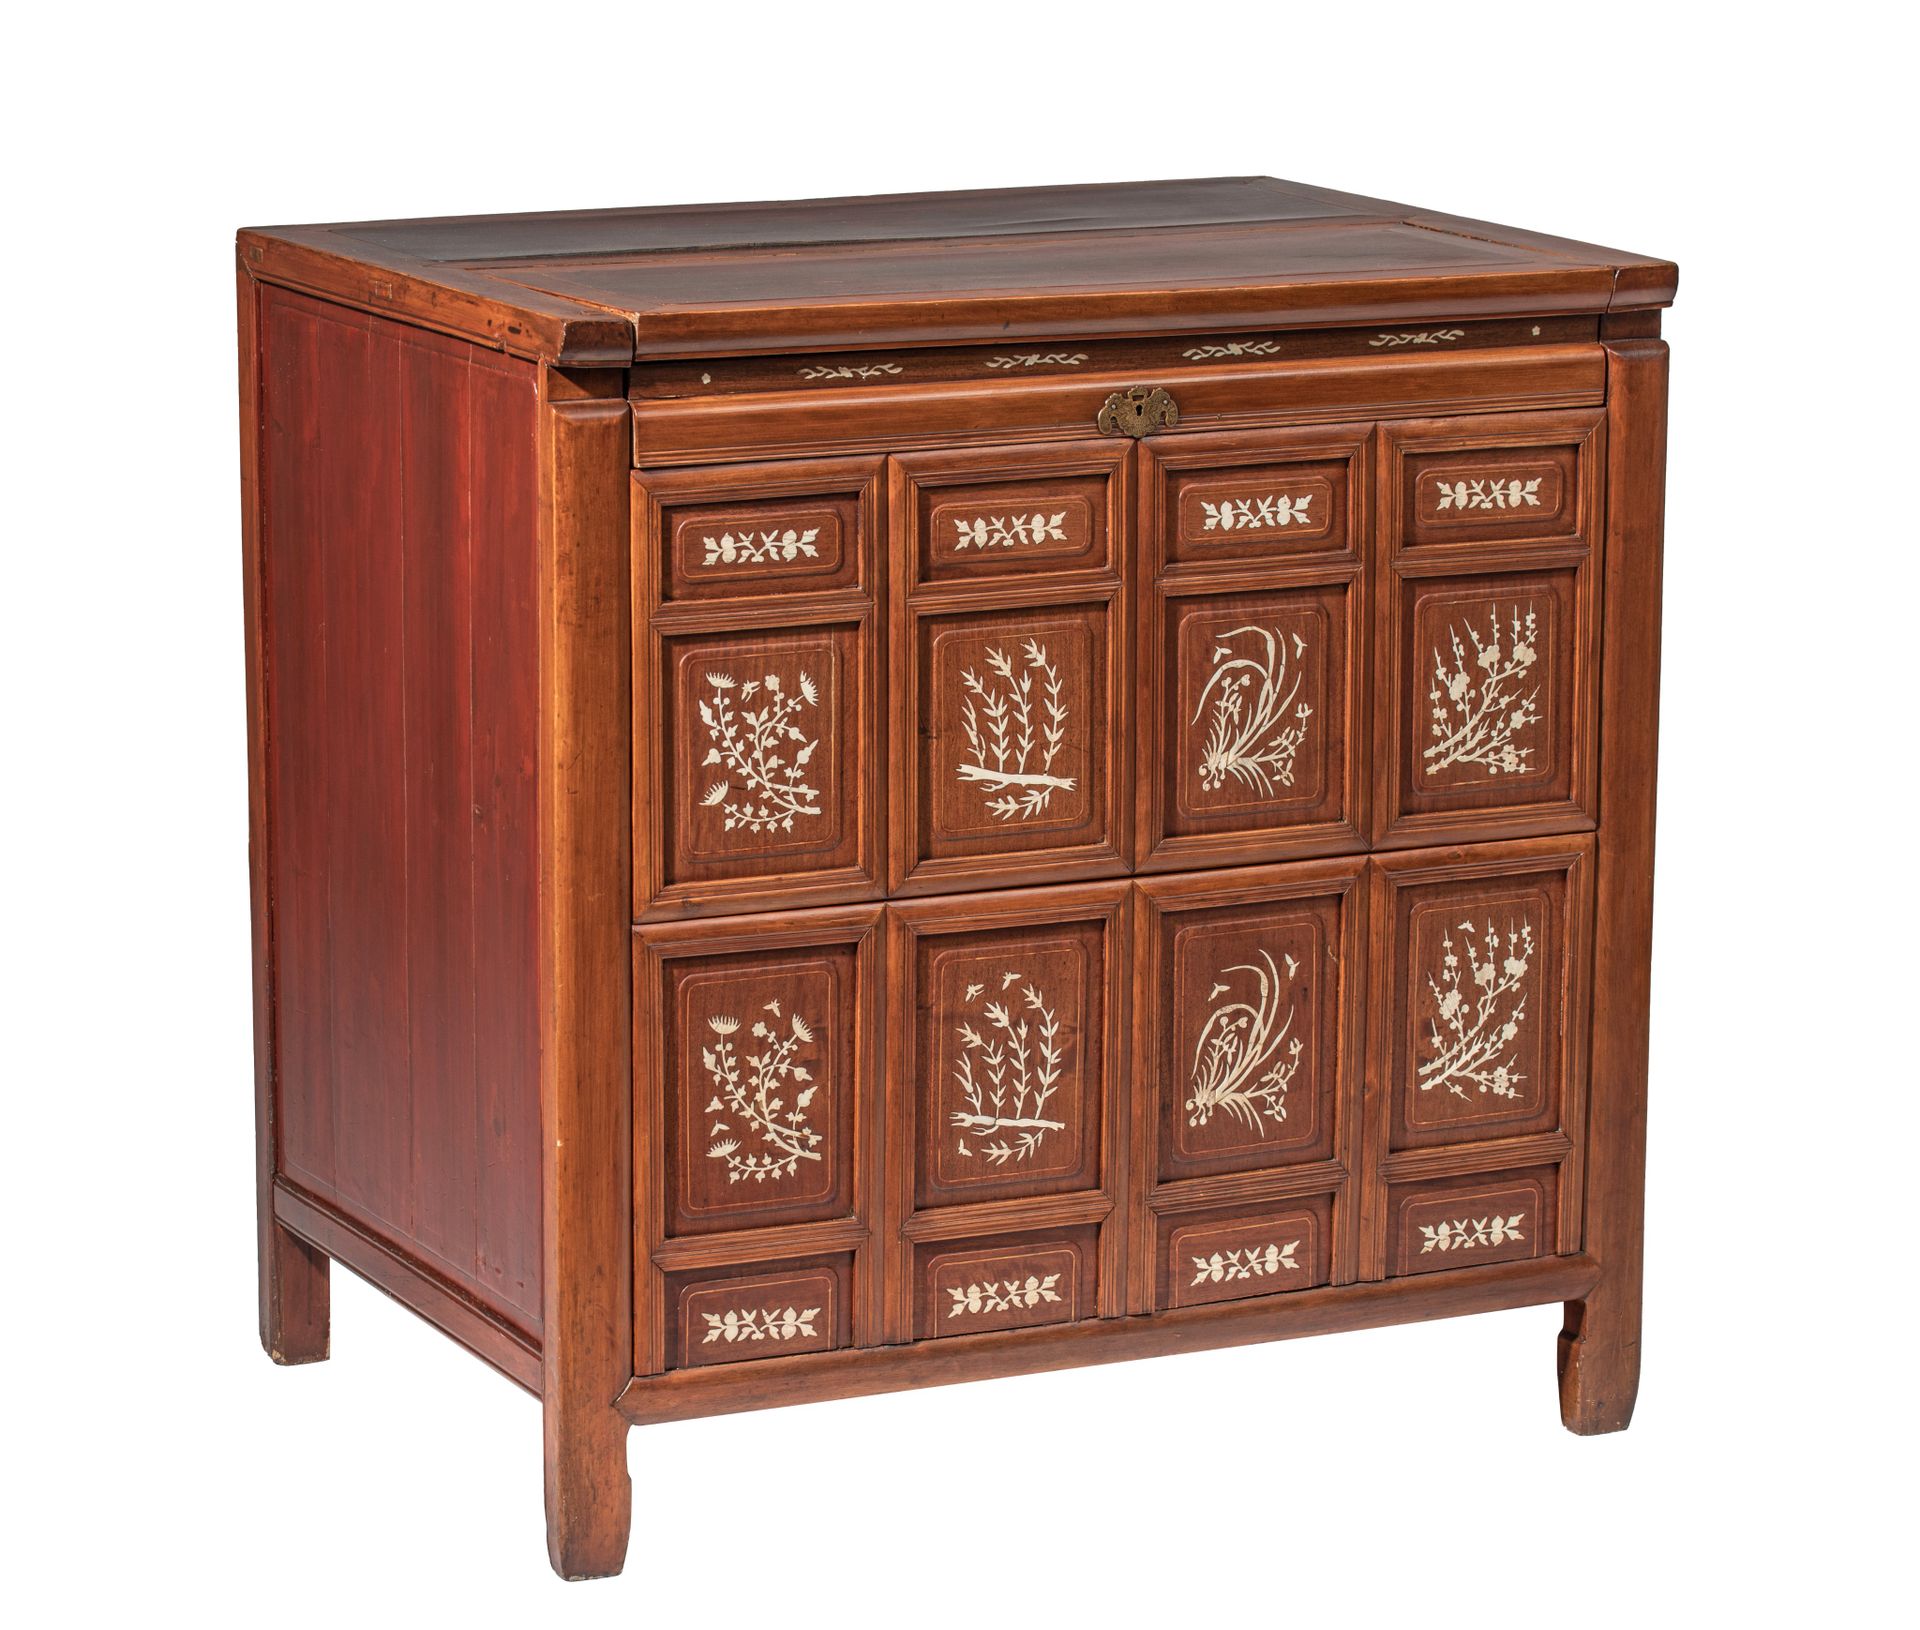 A Chinese assembled hardwood chest, 95 x 67 - H 95 cm Un baúl chino de madera du&hellip;